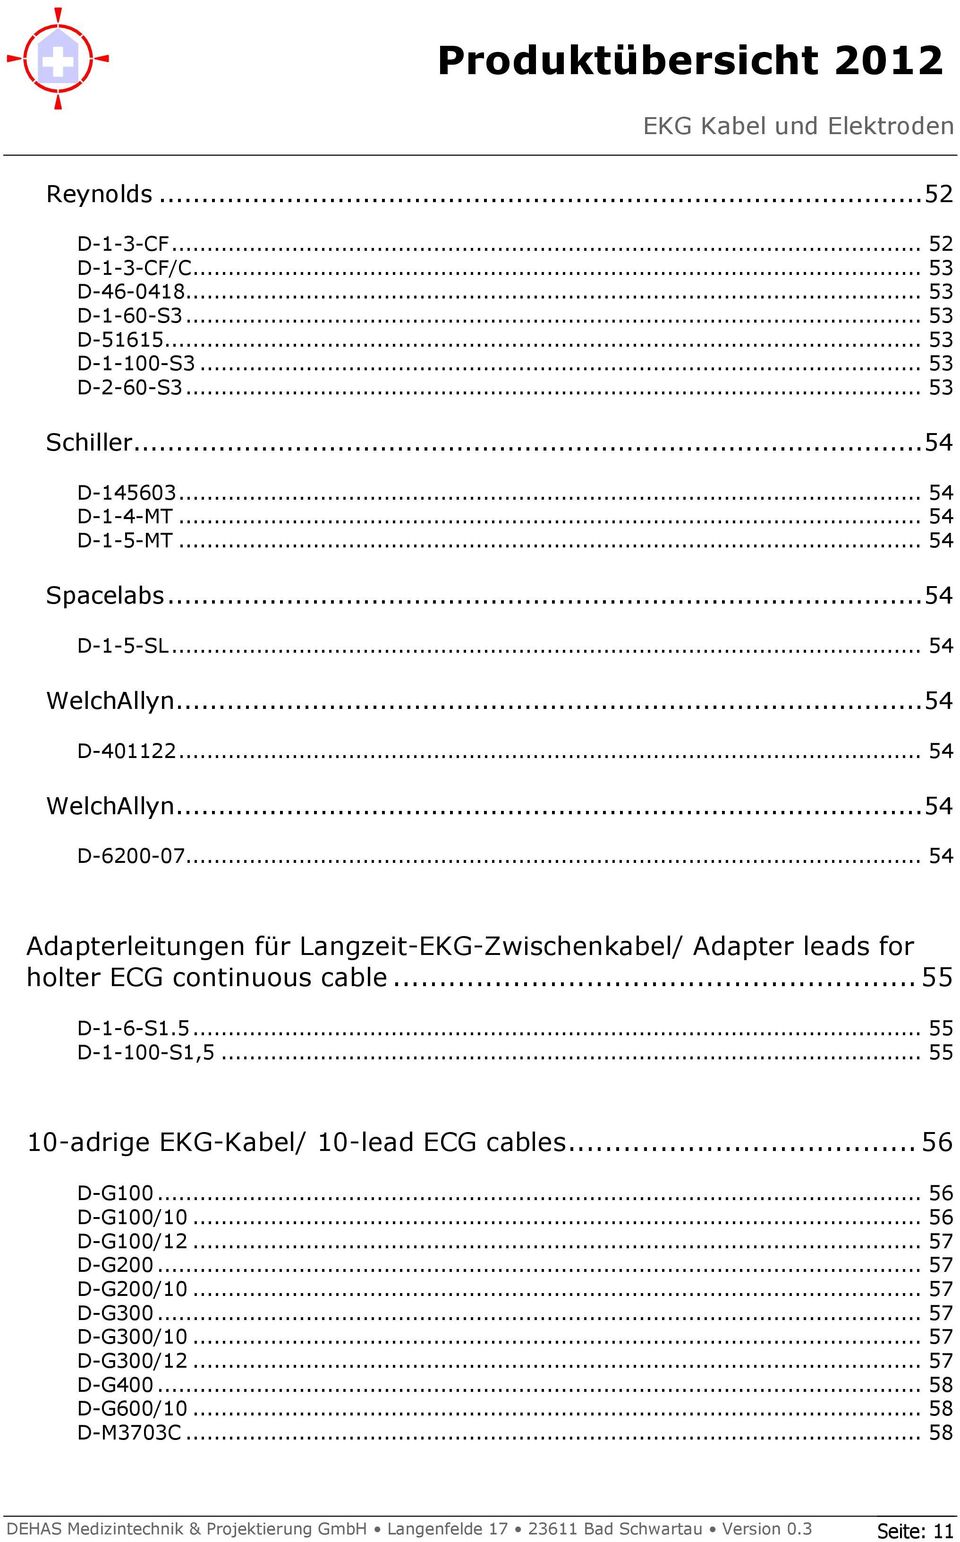 .. 54 Adapterleitungen für Langzeit-EKG-Zwischenkabel/ Adapter leads for holter ECG continuous cable... 55 D-1-6-S1.5... 55 D-1-100-S1,5... 55 10-adrige EKG-Kabel/ 10-lead ECG cables.